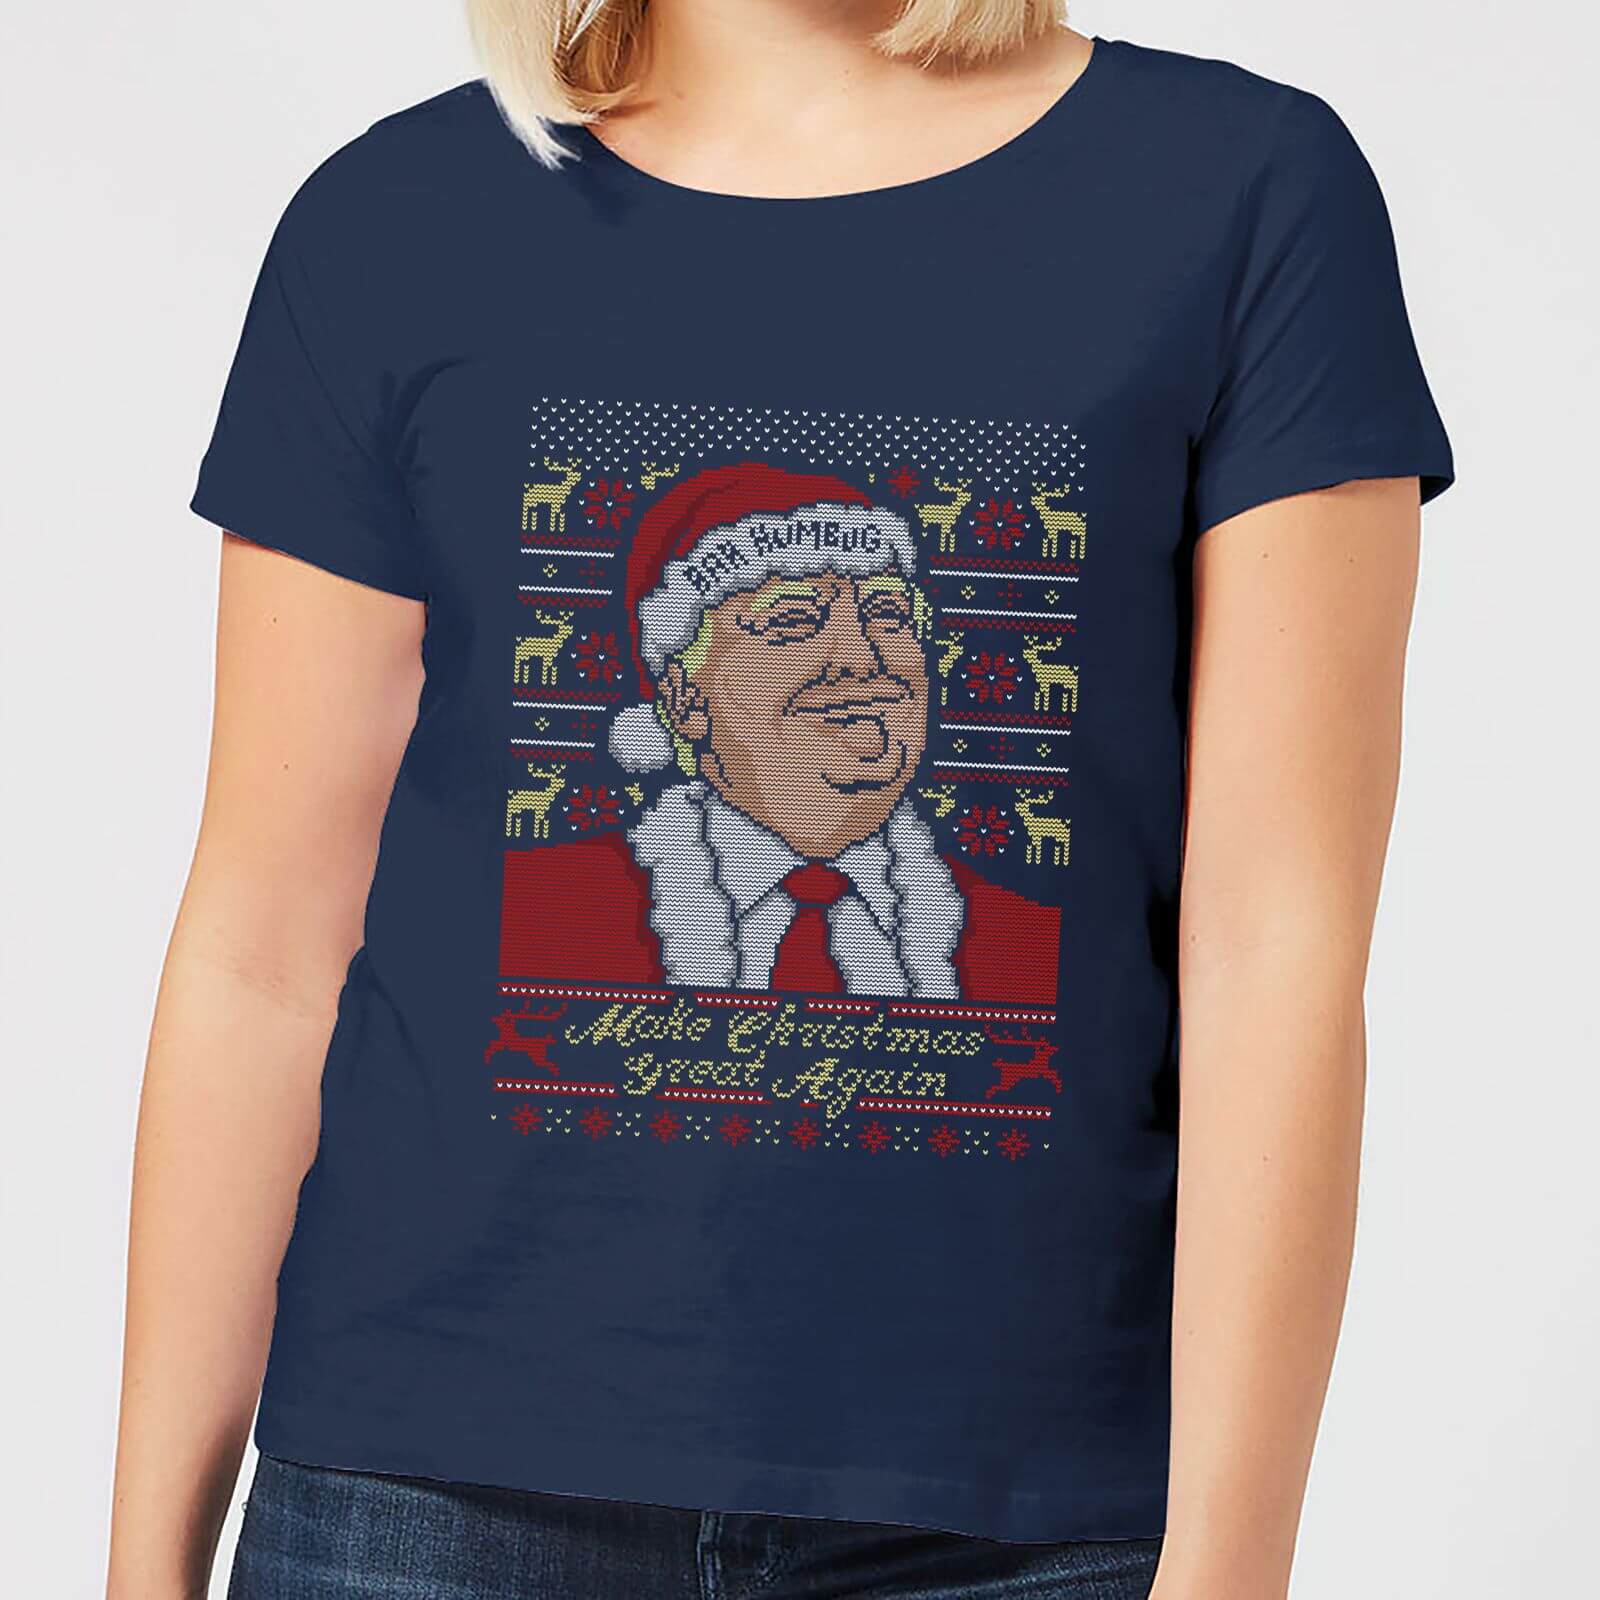 Make Christmas Great Again Women's Christmas T-Shirt - Navy - S - Navy